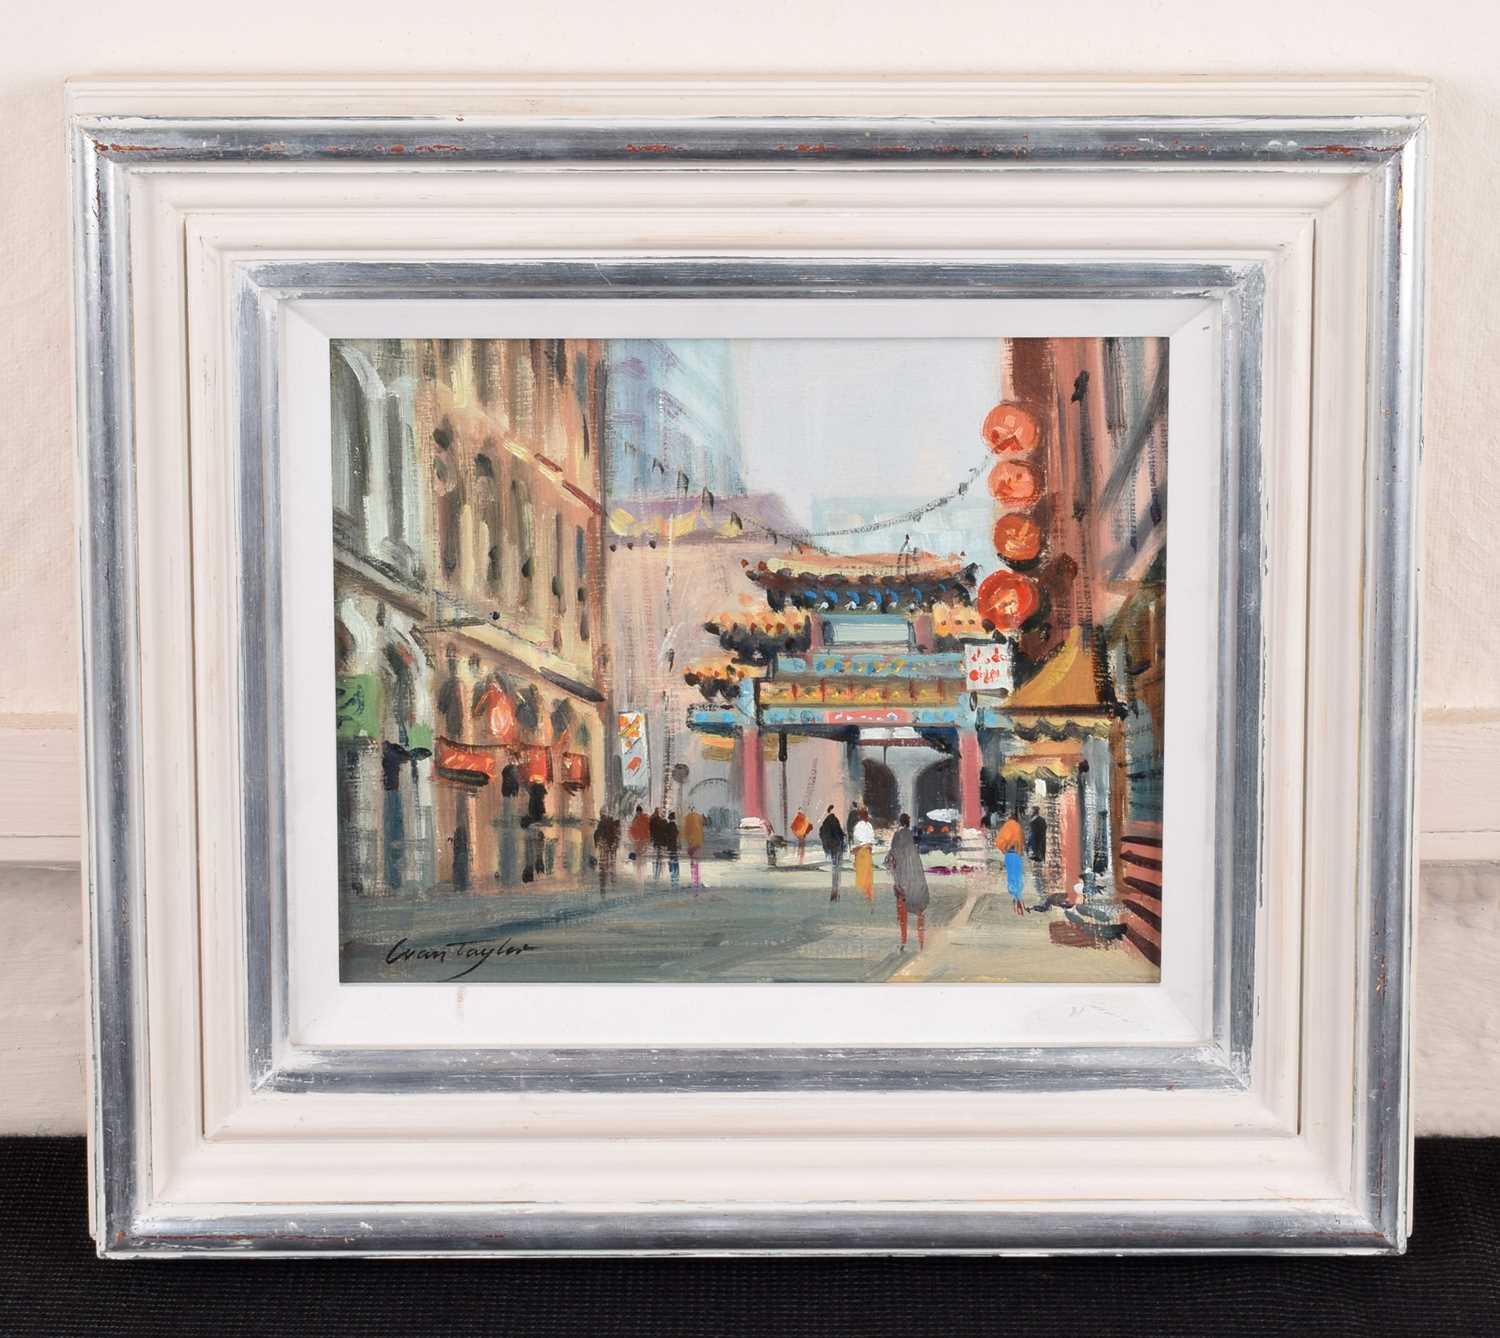 Ivan Taylor (British 1946-) "Chinatown, Manchester" - Image 2 of 2